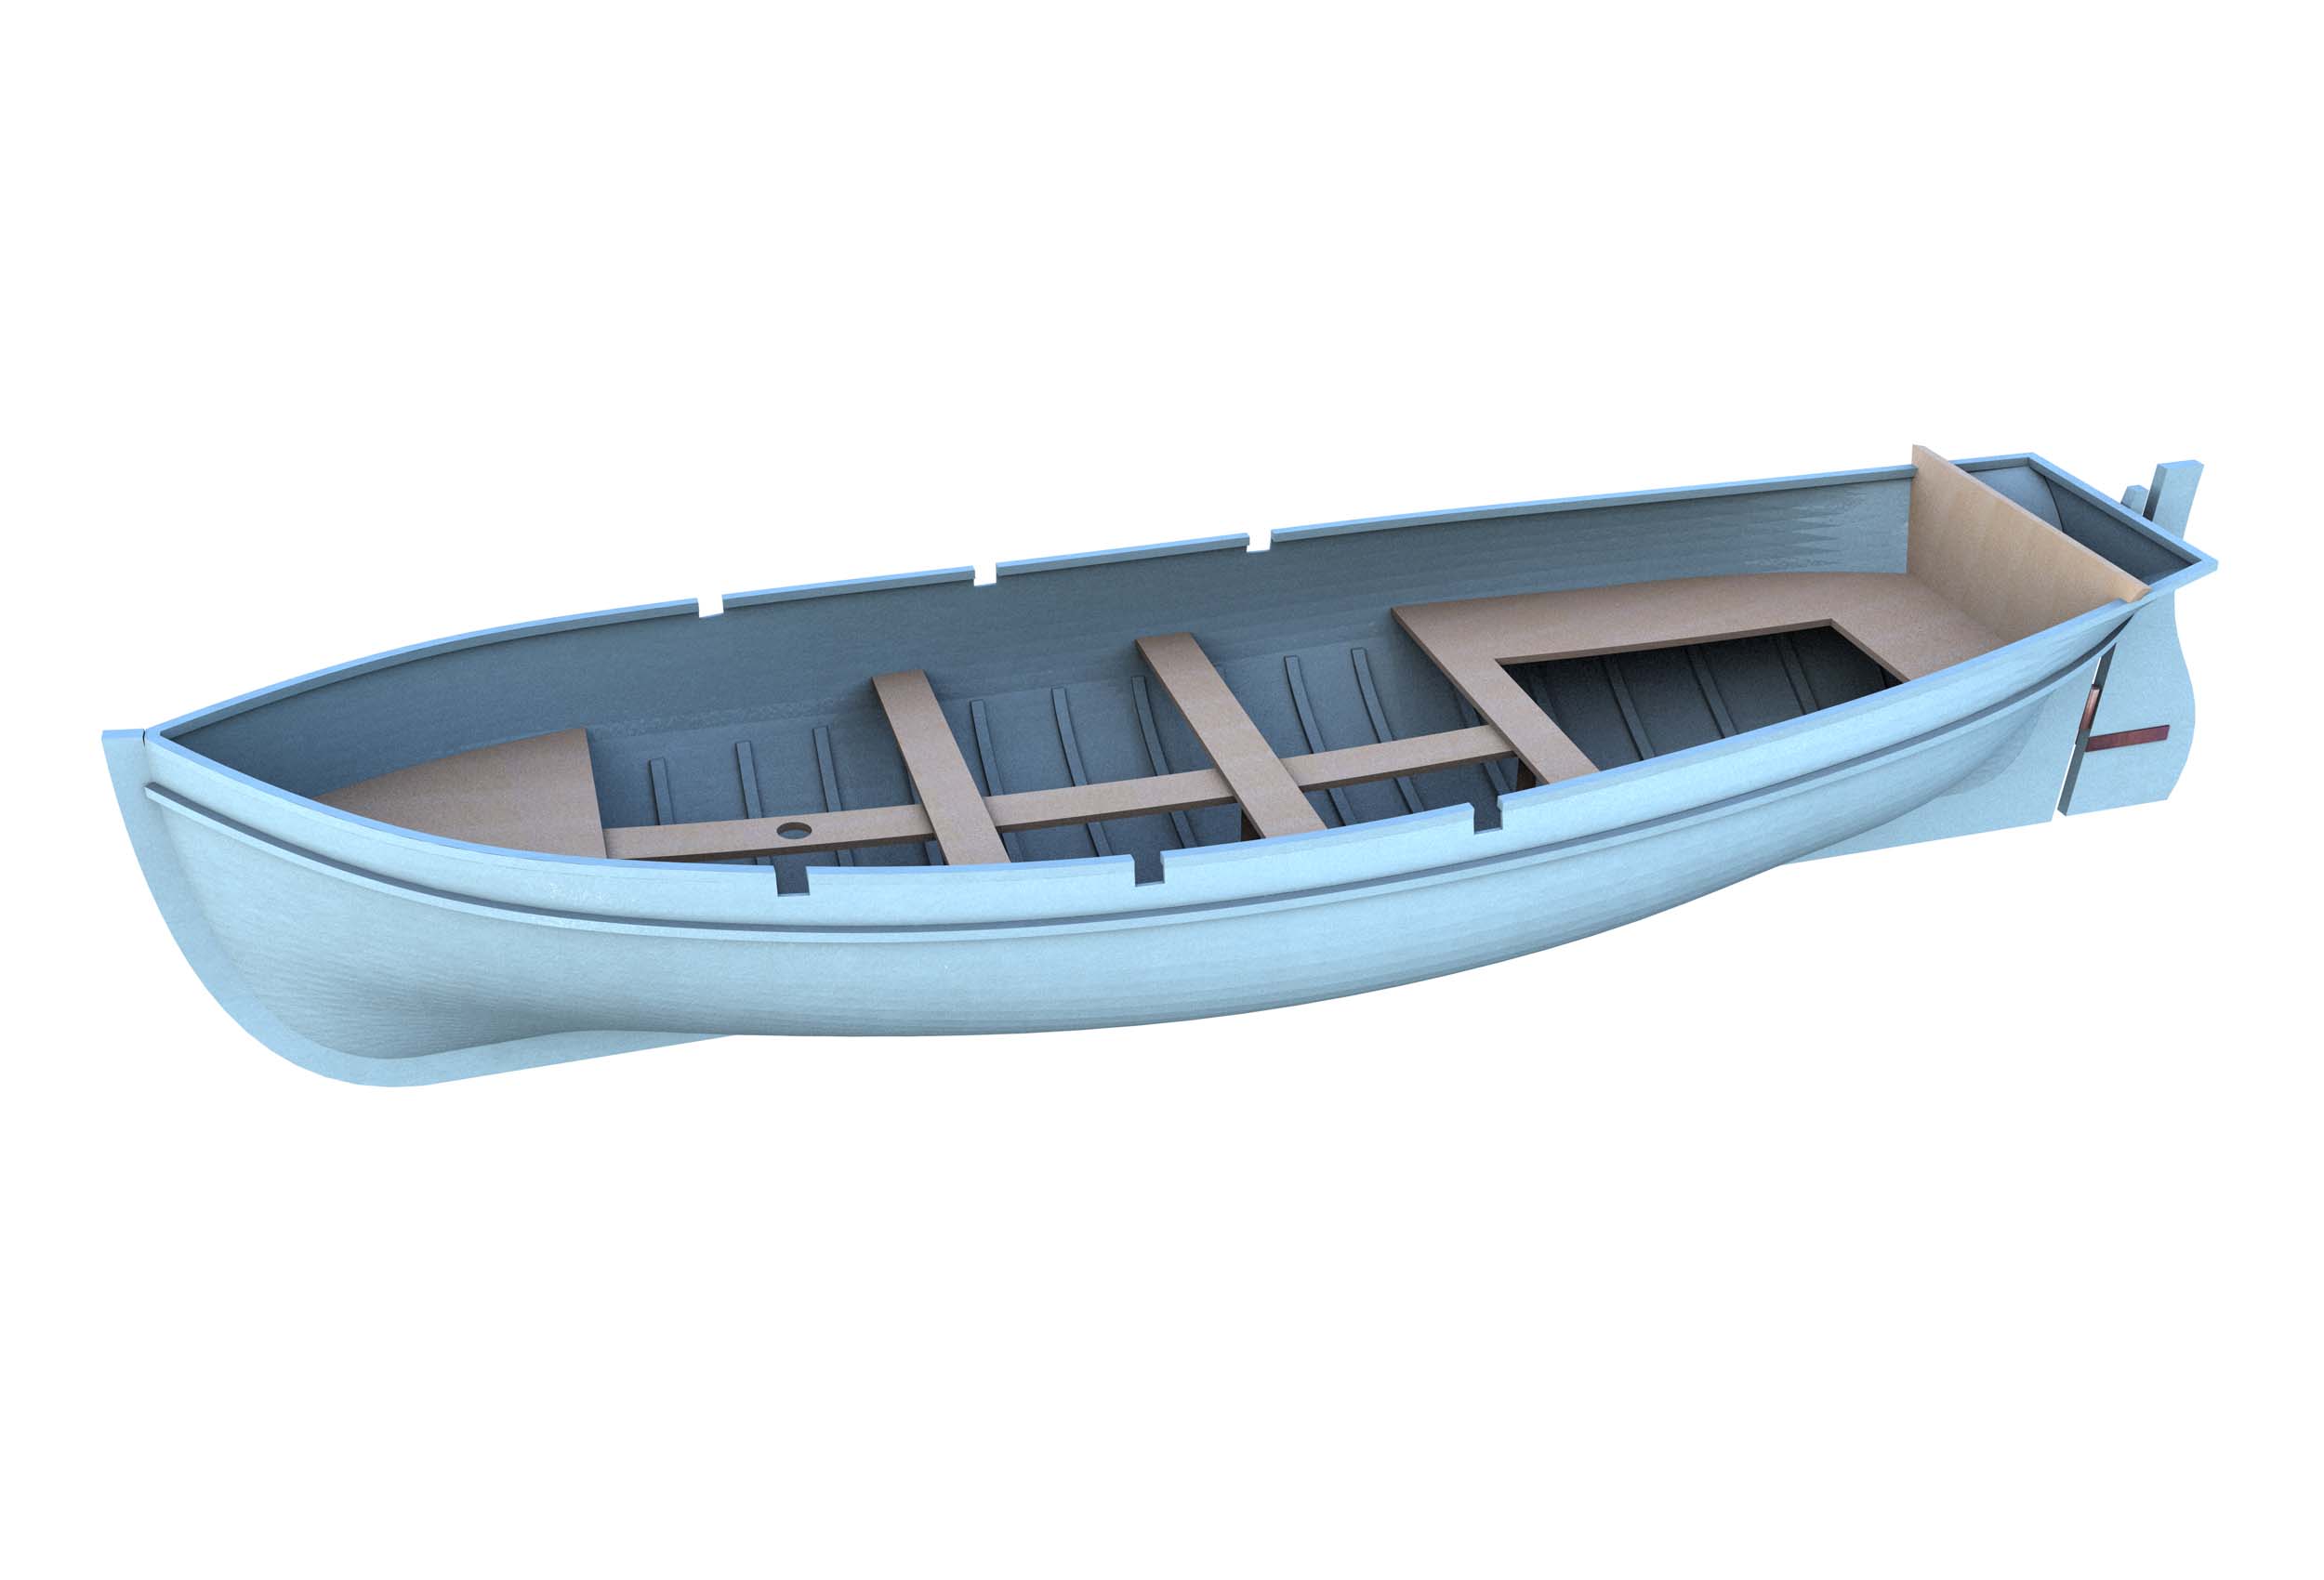 https://0901.nccdn.net/4_2/000/000/017/e75/CK94-Individual-Small-Boat-Jollboot-Port-Side.jpg